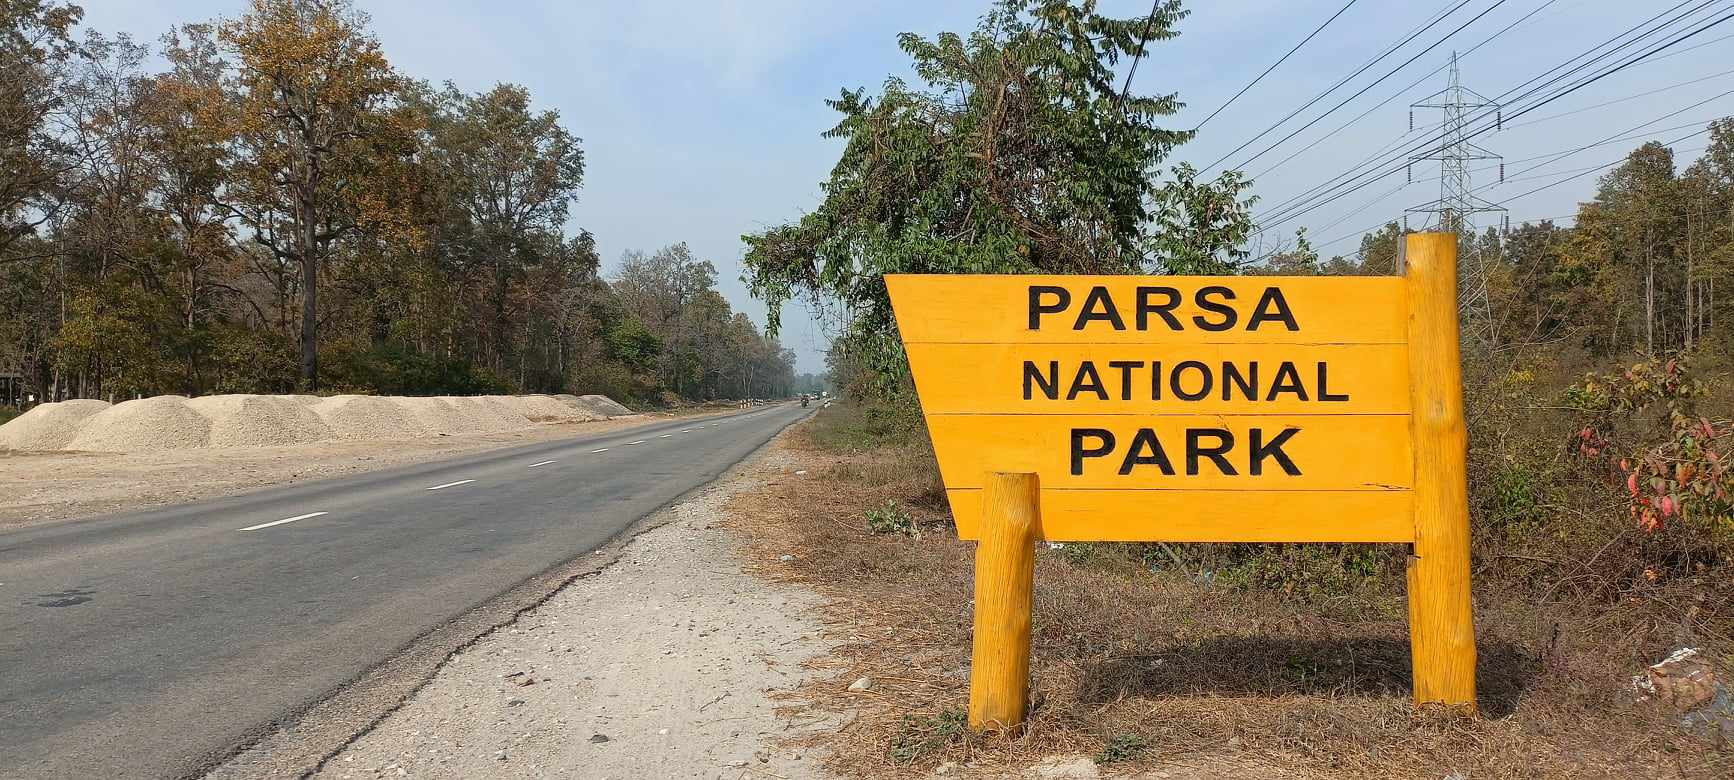 parsa national park (3)